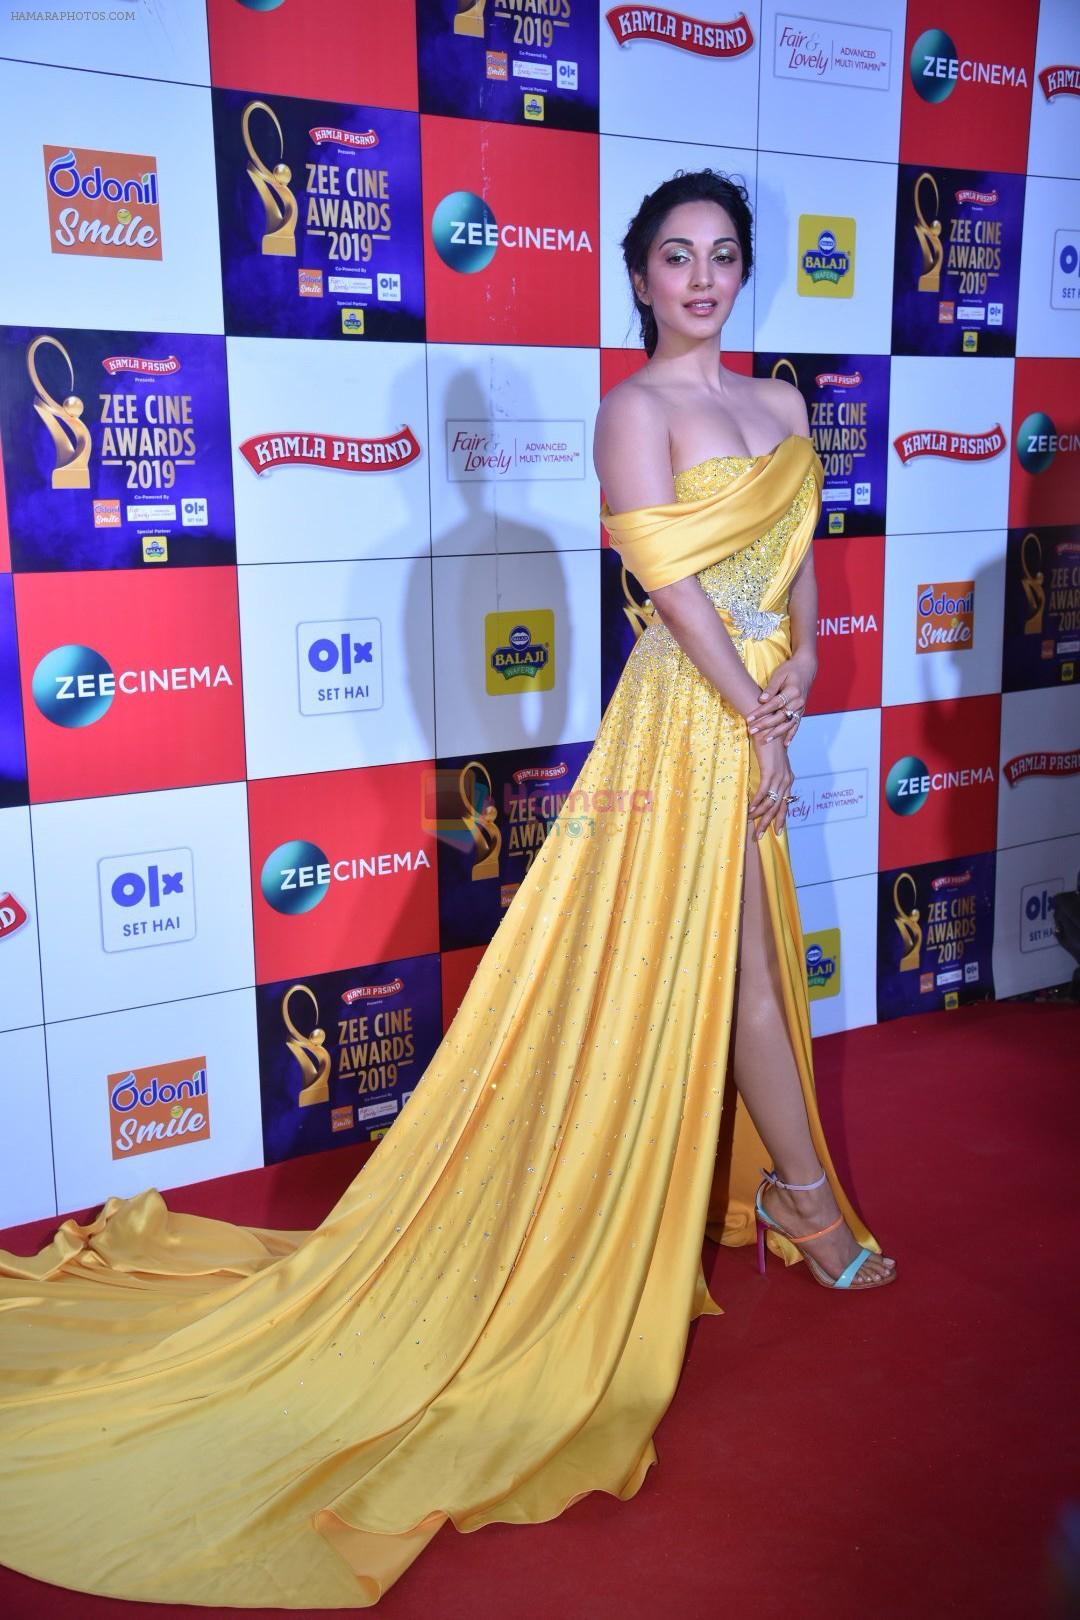 Kiara Advani at Zee cine awards red carpet on 19th March 2019